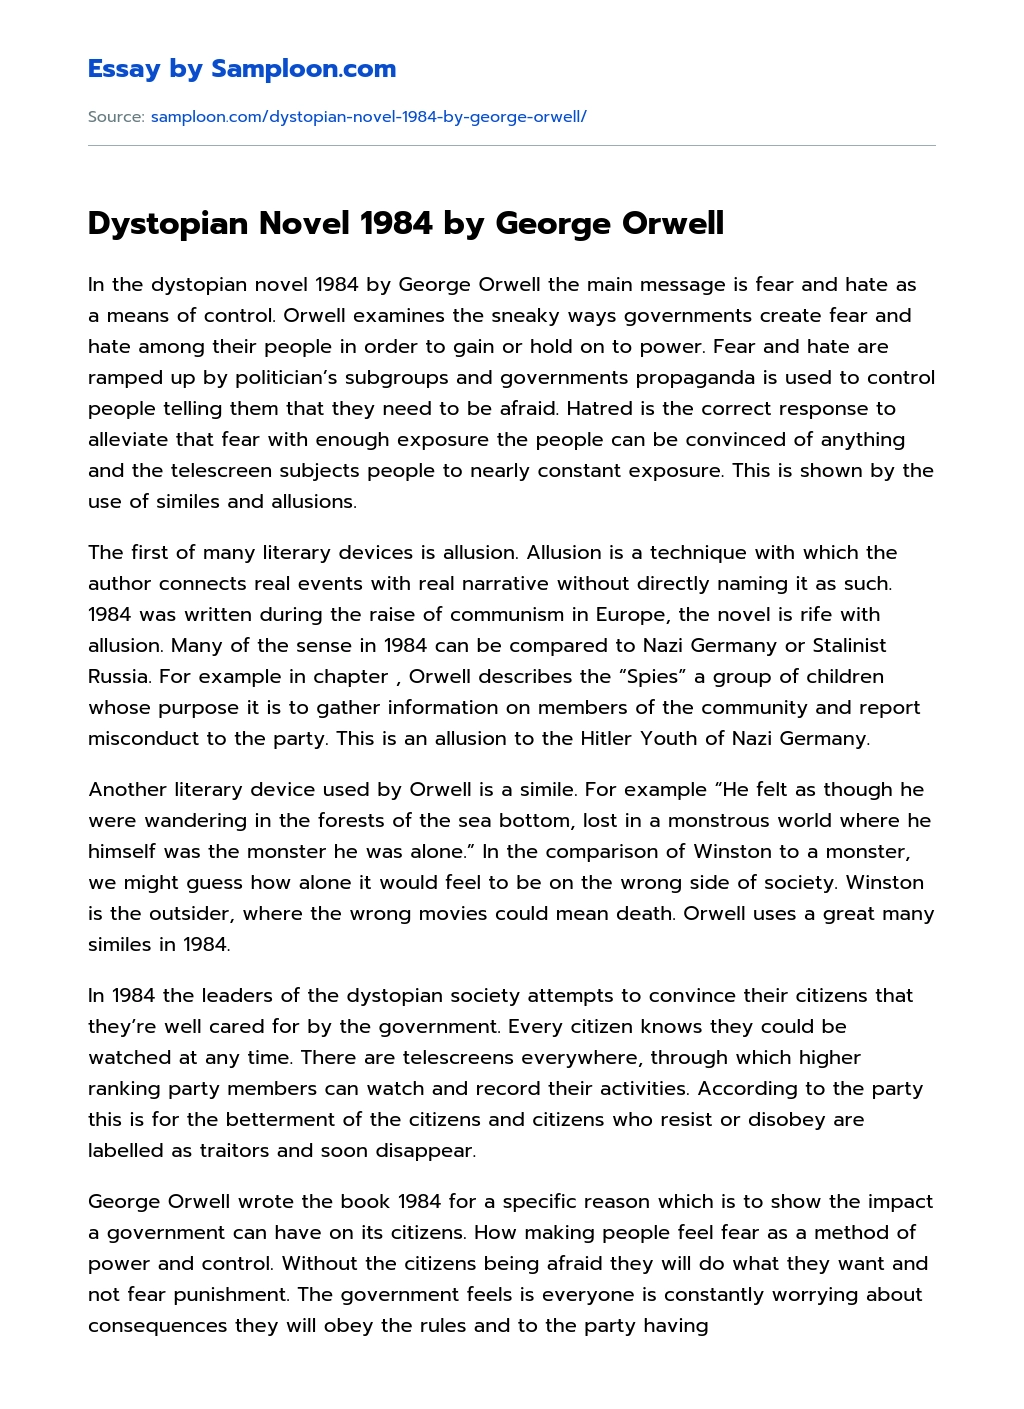 Dystopian Novel 1984 by George Orwell Analytical Essay essay